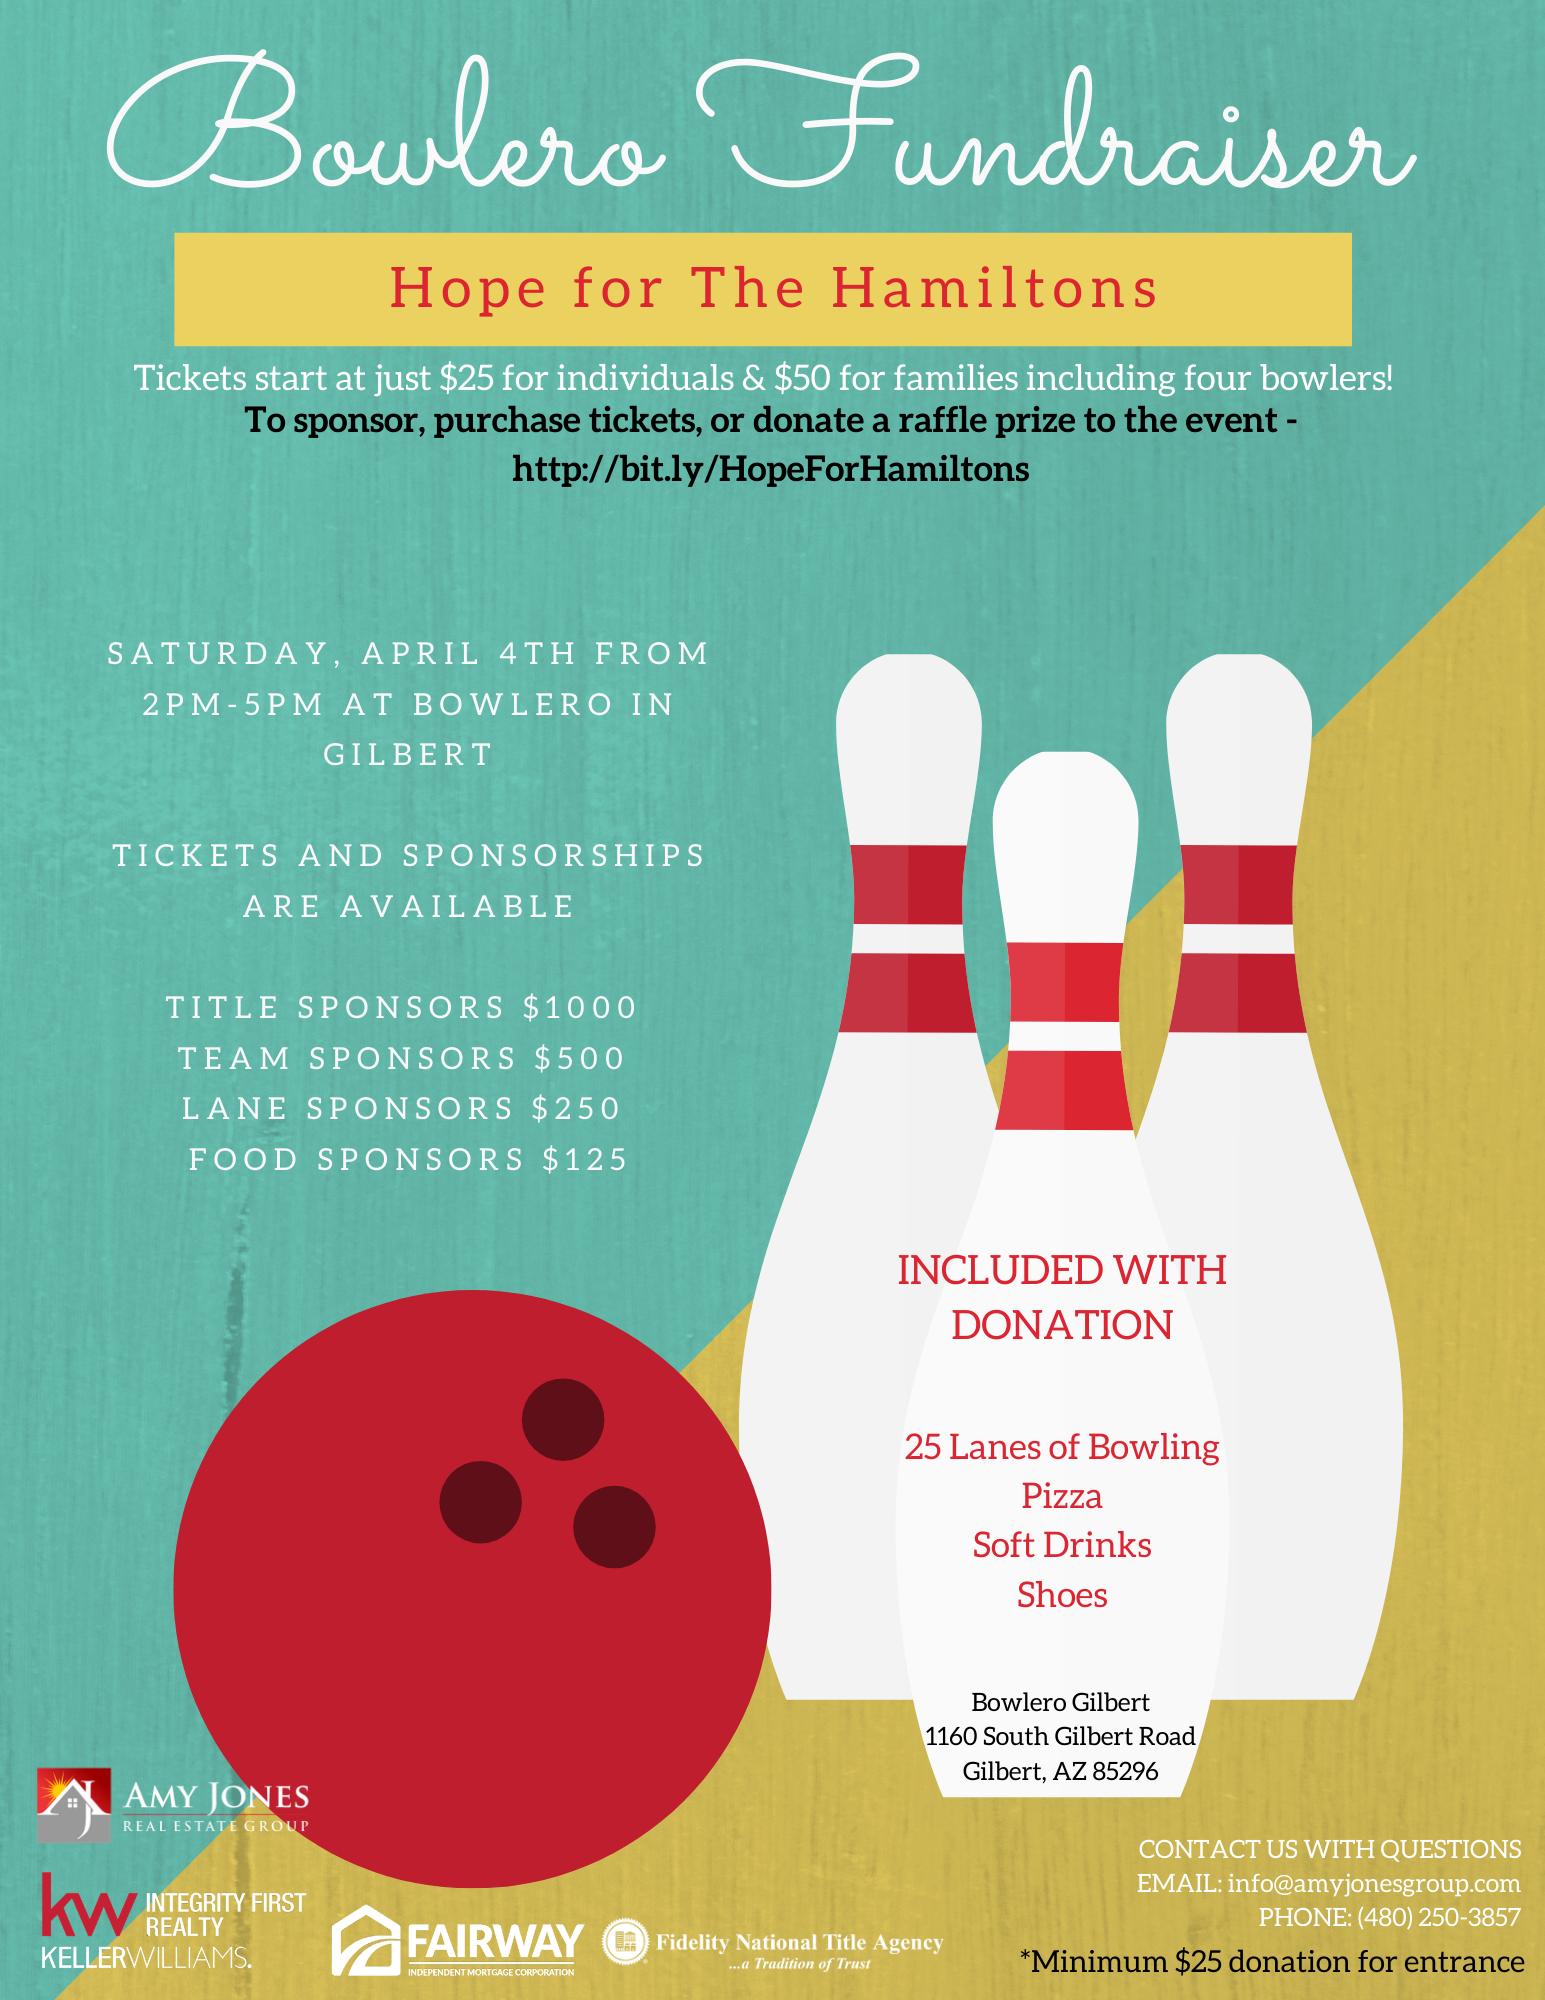 Hope for The Hamiltons - Bowlero Fundraiser